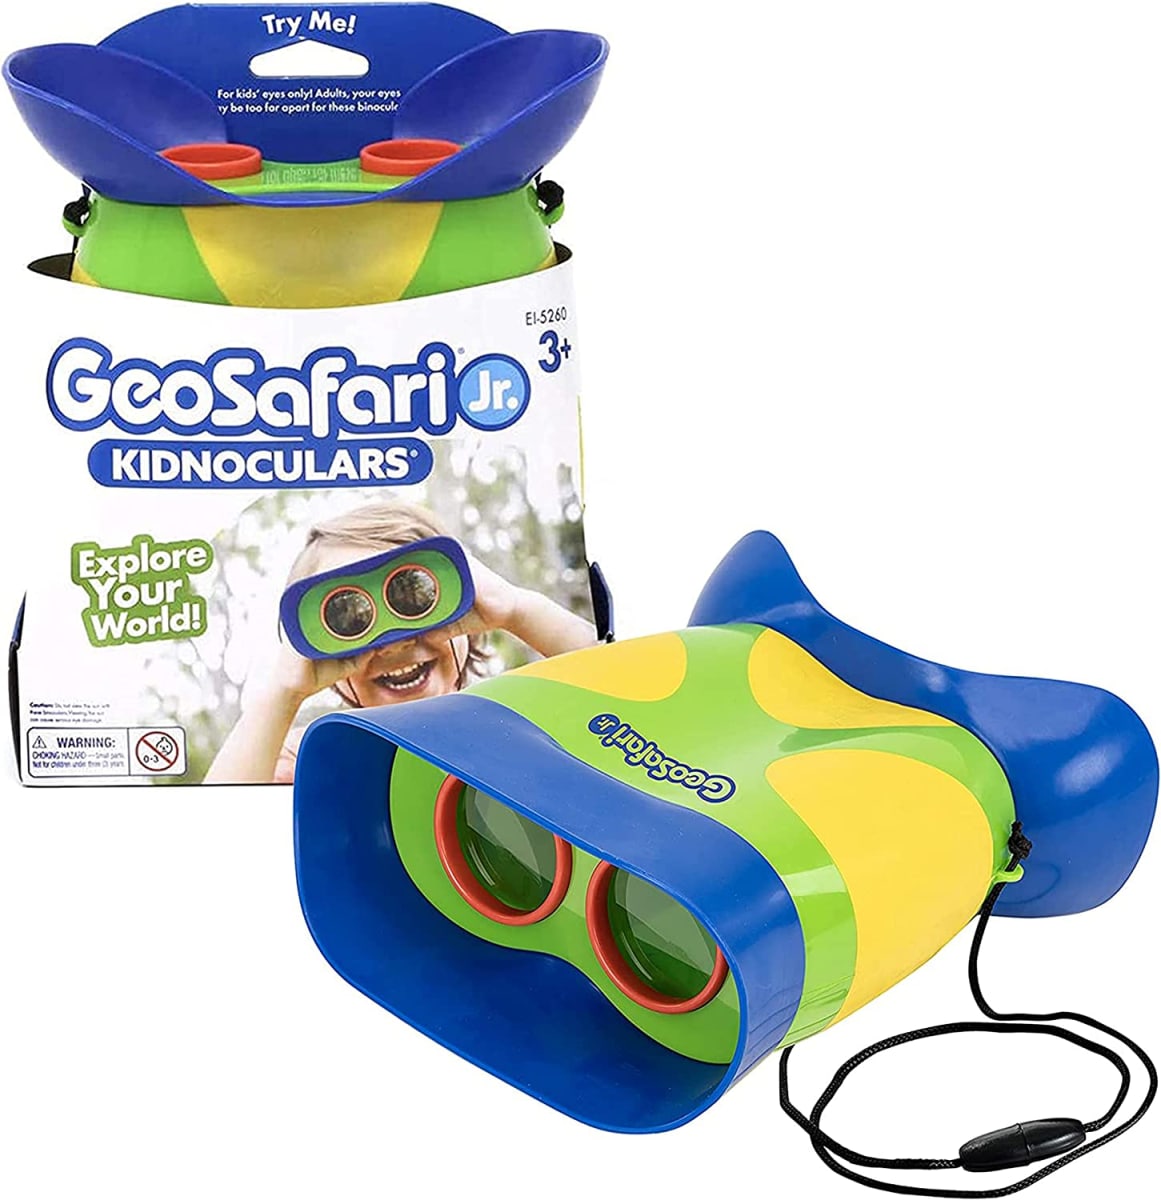 GeoSafari Jr. Kidnoculars, Binoculars for Toddlers & Kids, Stocking Stuffers for Boys & Girls, Ages 3+